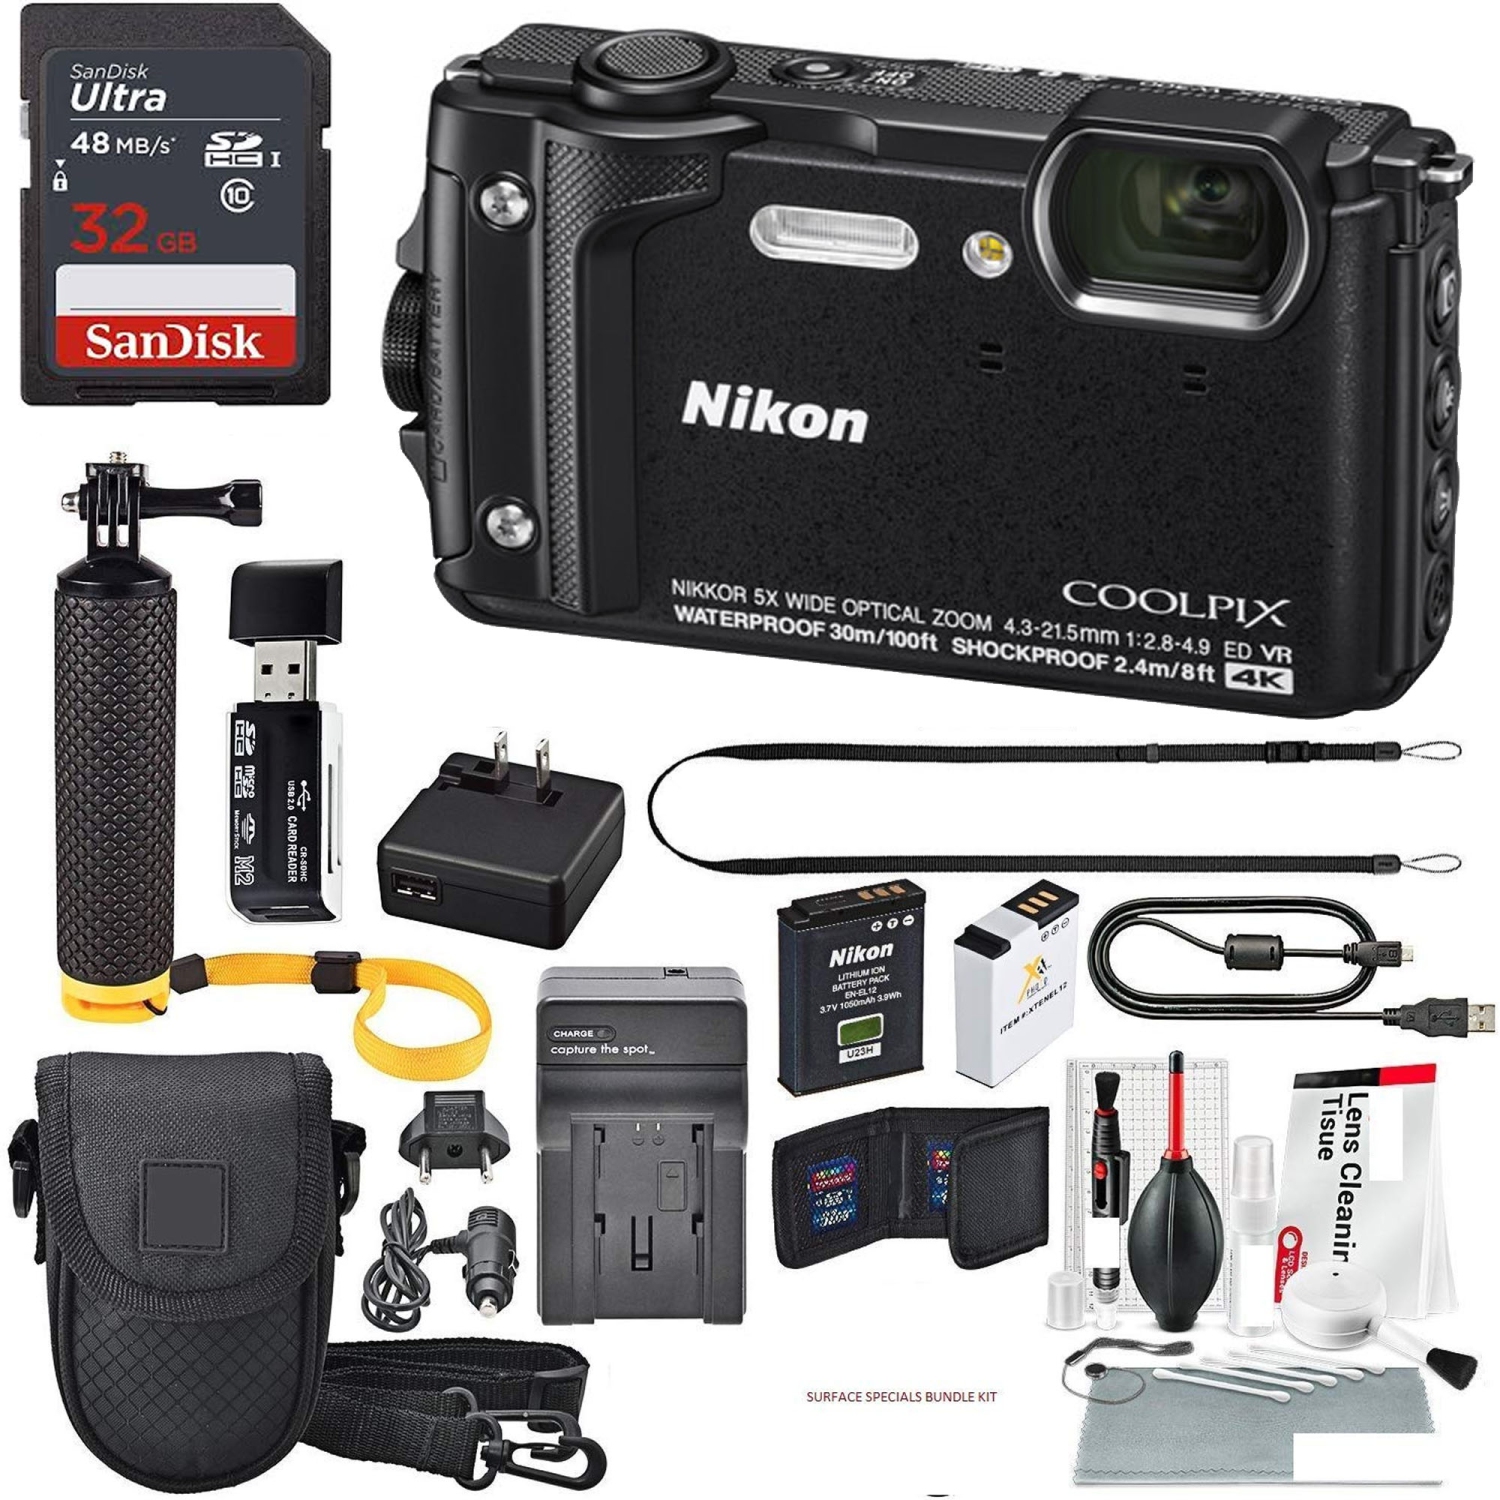 Nikon COOLPIX W300 Digital Camera (Black) W/ Deluxe Adventure Bundle with 32GB + Case + Floating Grip +Battery + Cleaning Kit - US Version w/ Seller Warranty